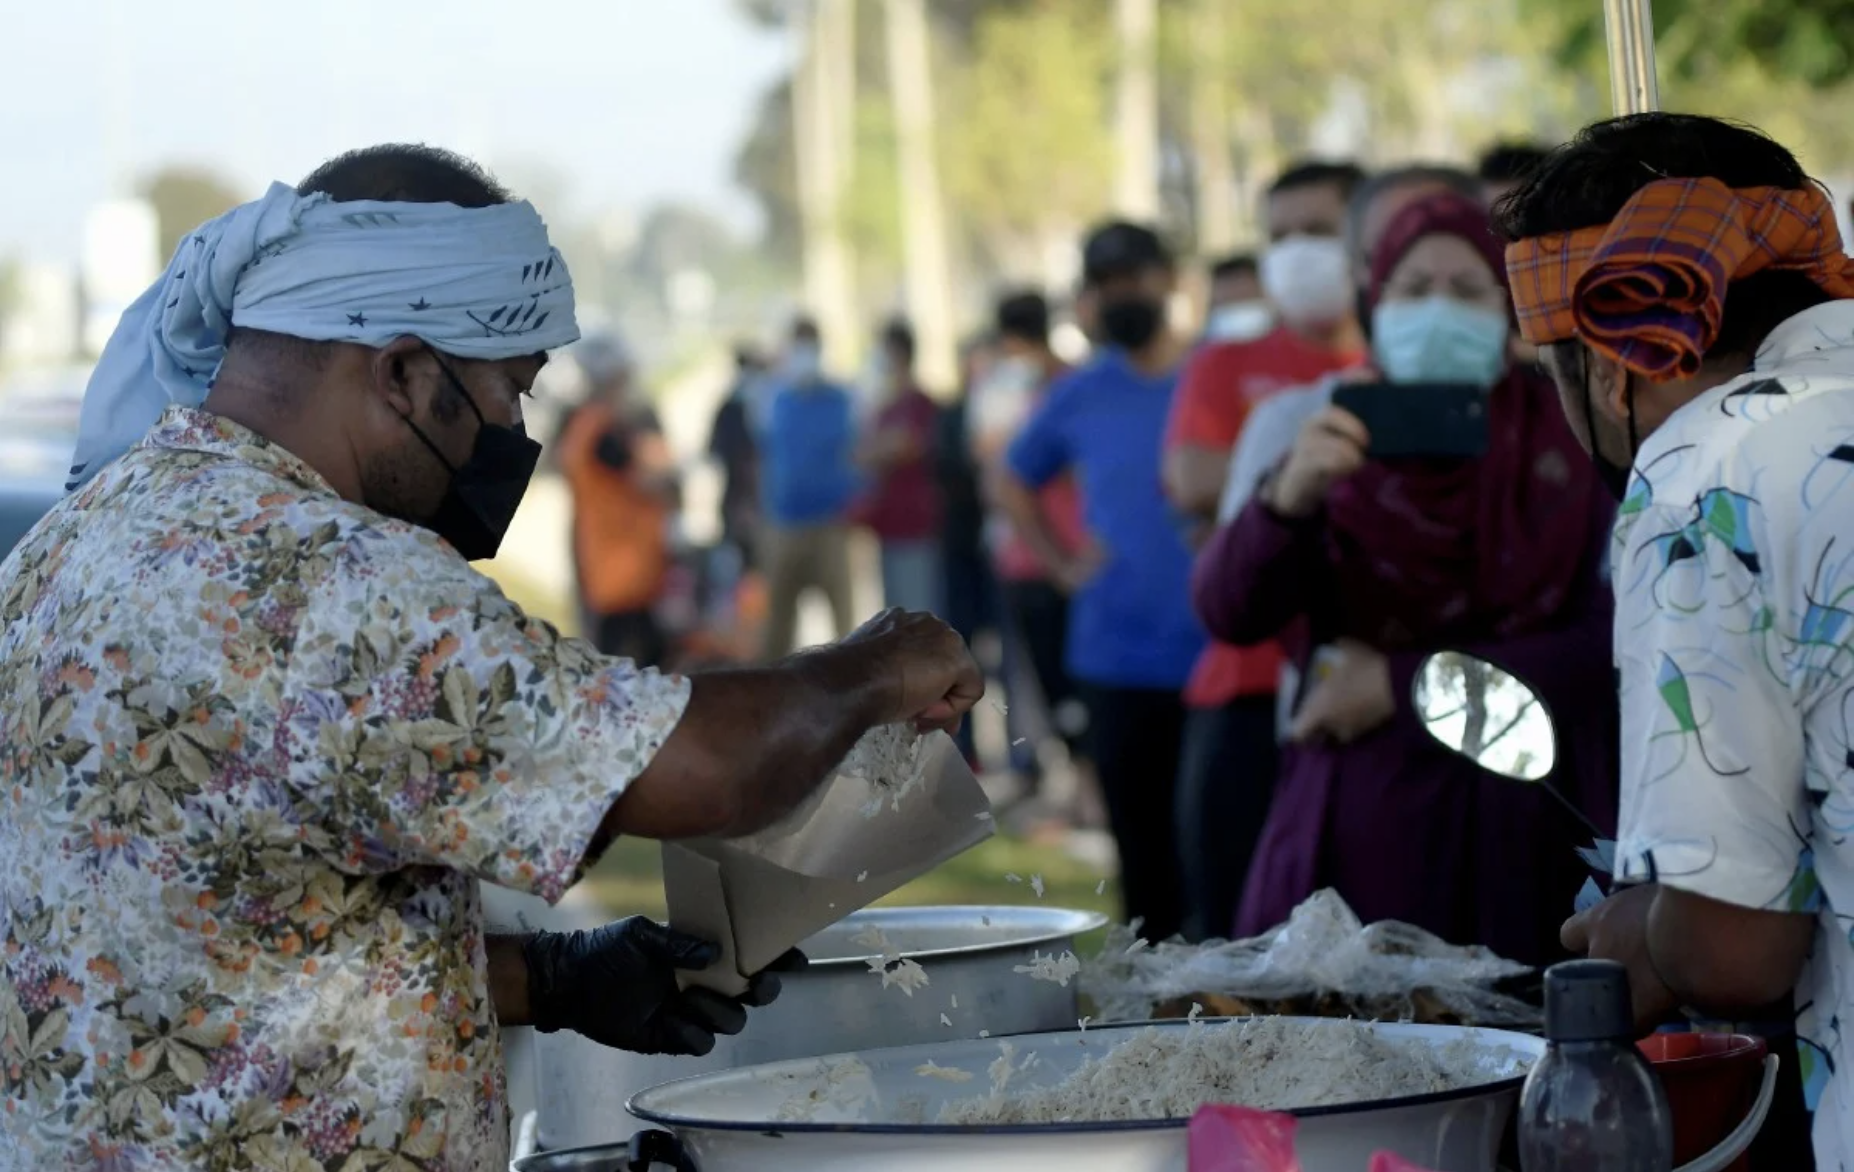 Nasi dagang vendor surprised by hordes of customers flocking in following viral documentary clip | weirdkaya